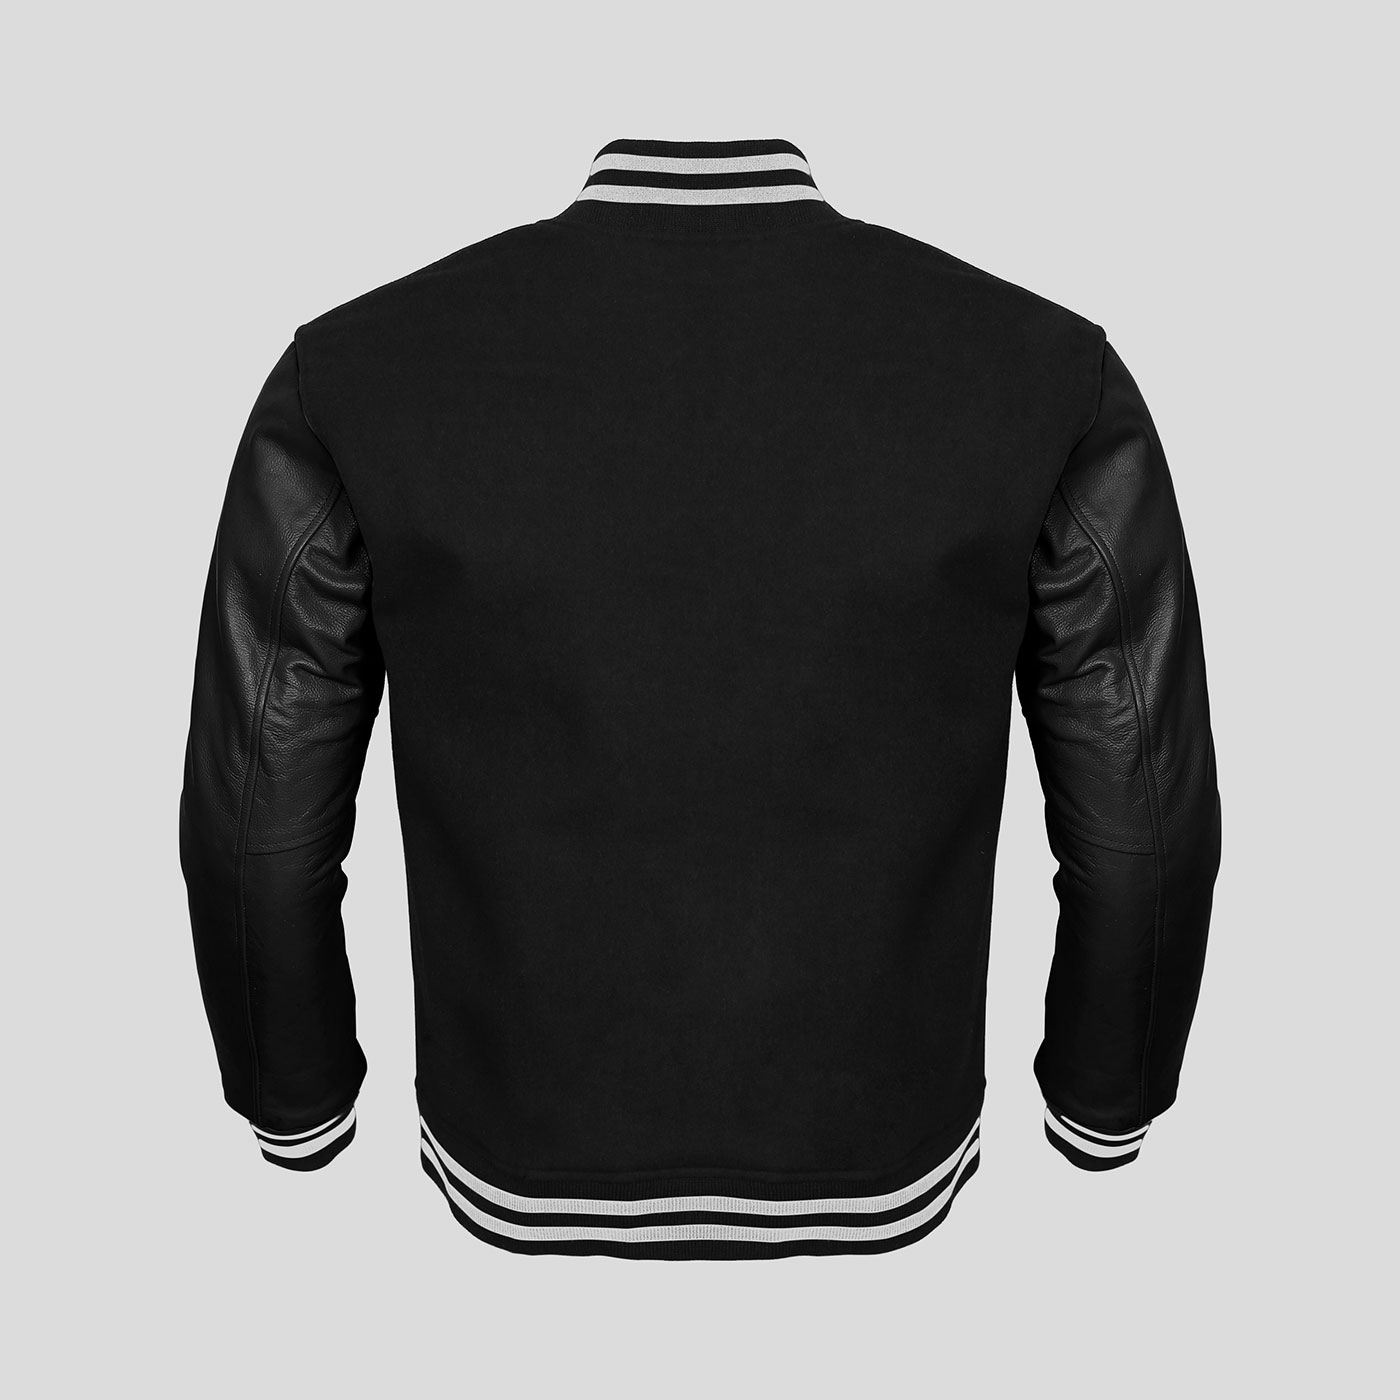 Classic Black Varsity Jacket